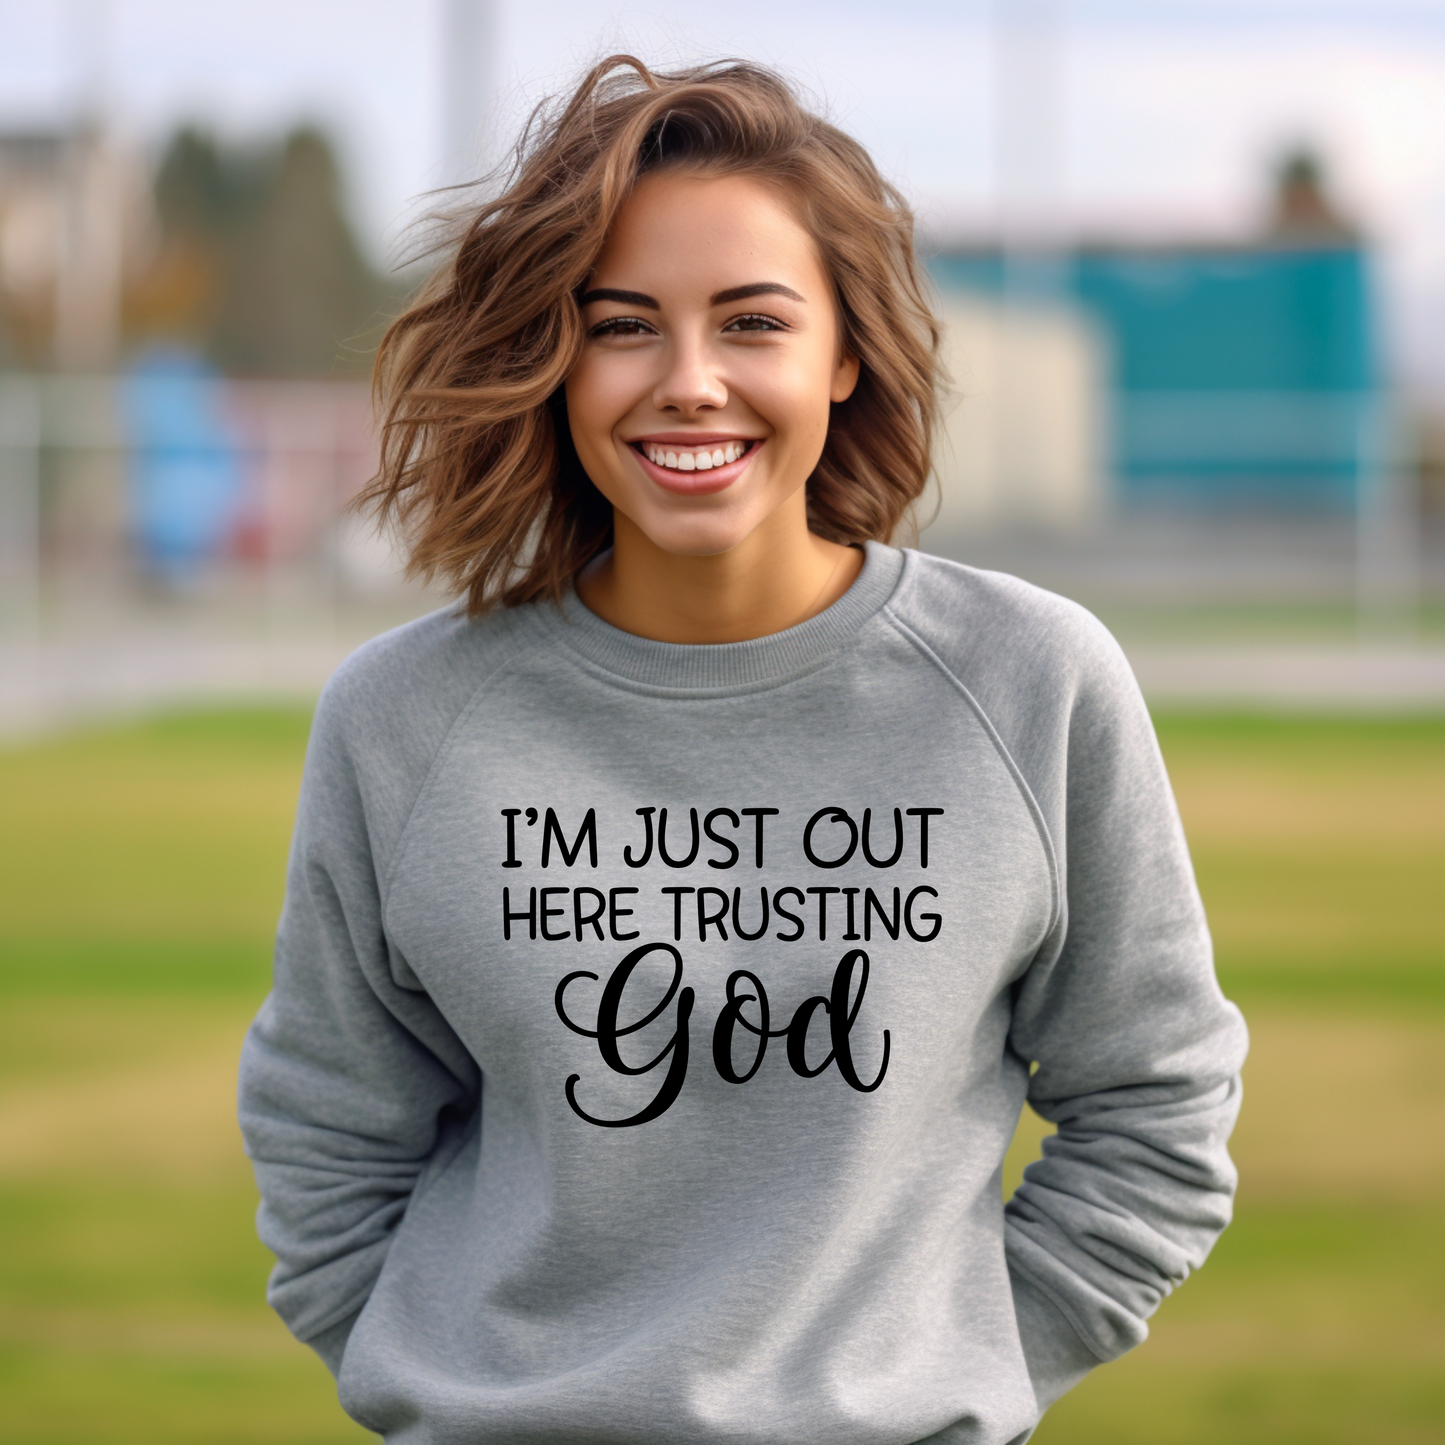 Trusting God Crewneck Sweatshirt